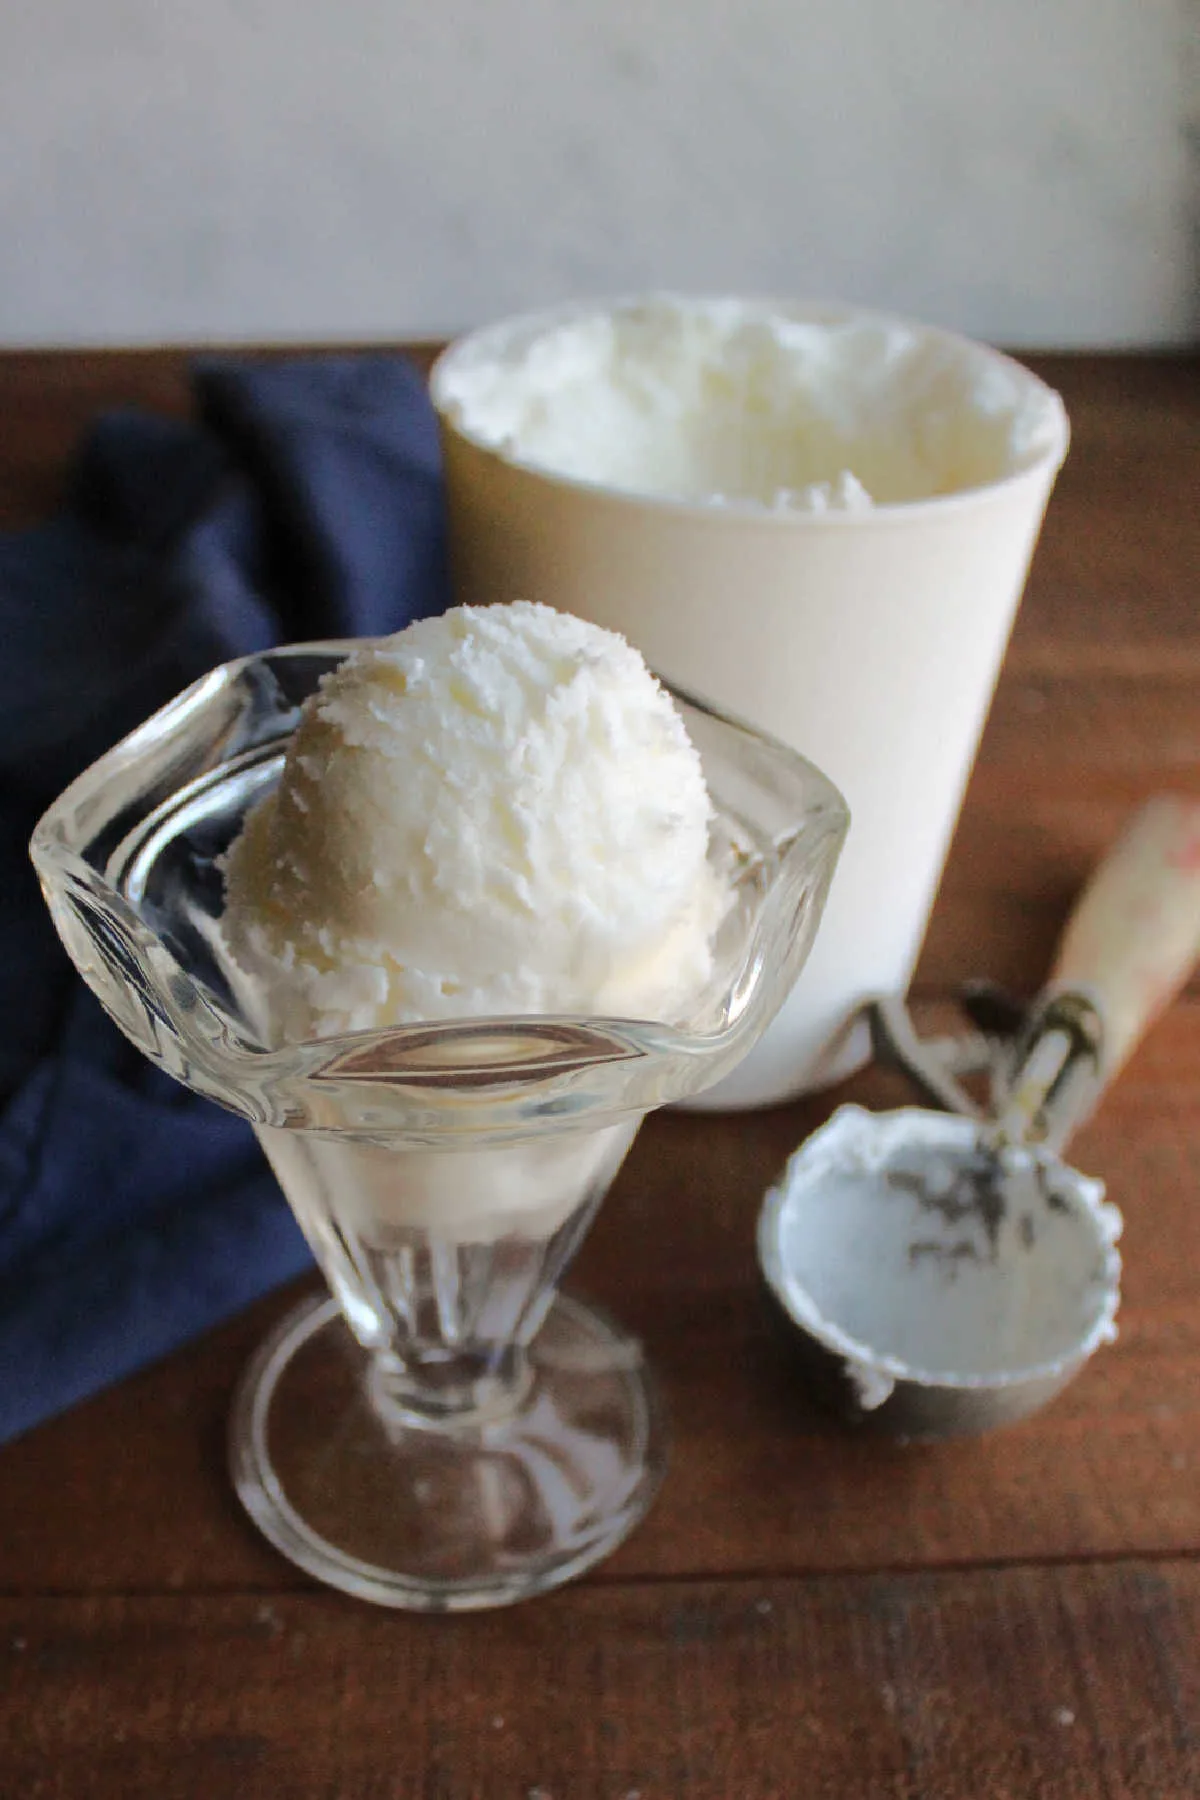 scoop of vanilla ice cream in sundae cup, ready to eat.